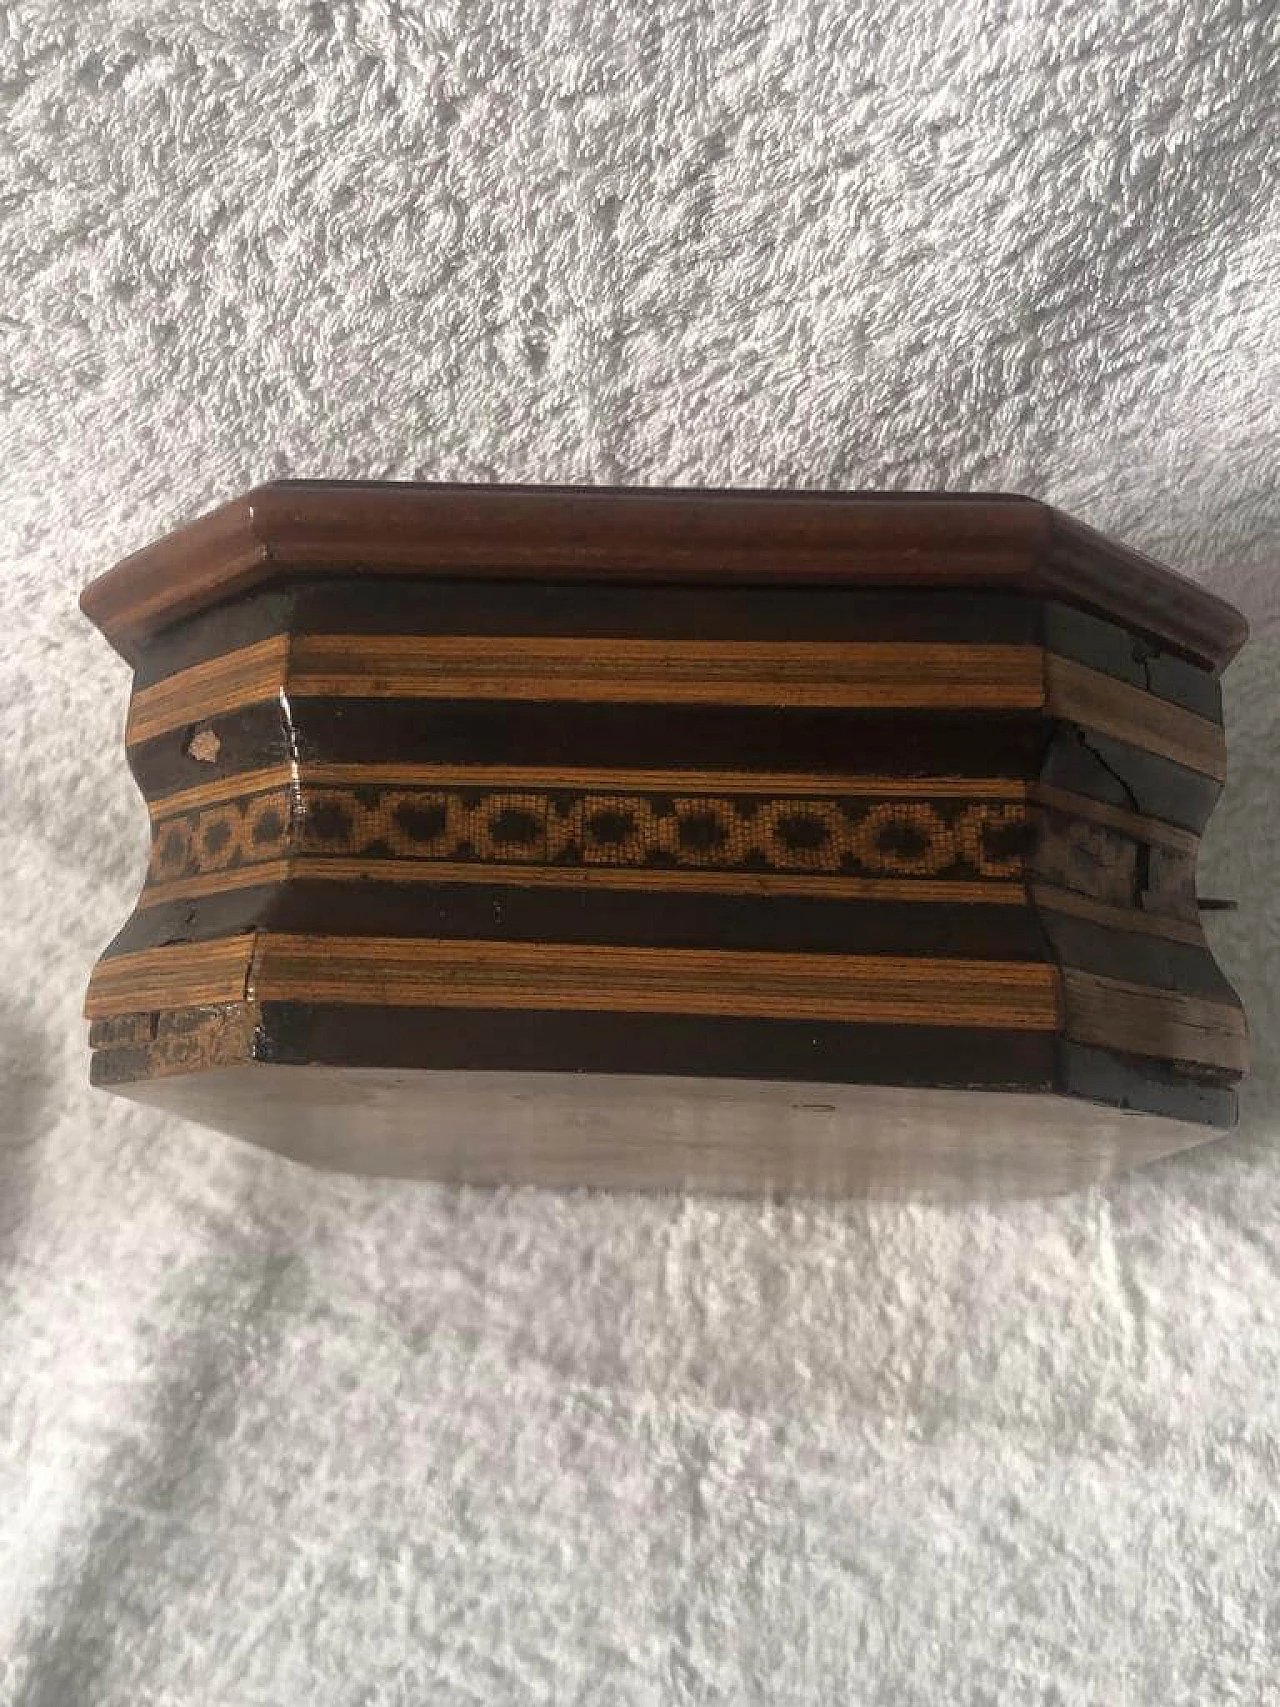 Sorrentine jewelry box in inlaid wood, 19th century 1400595